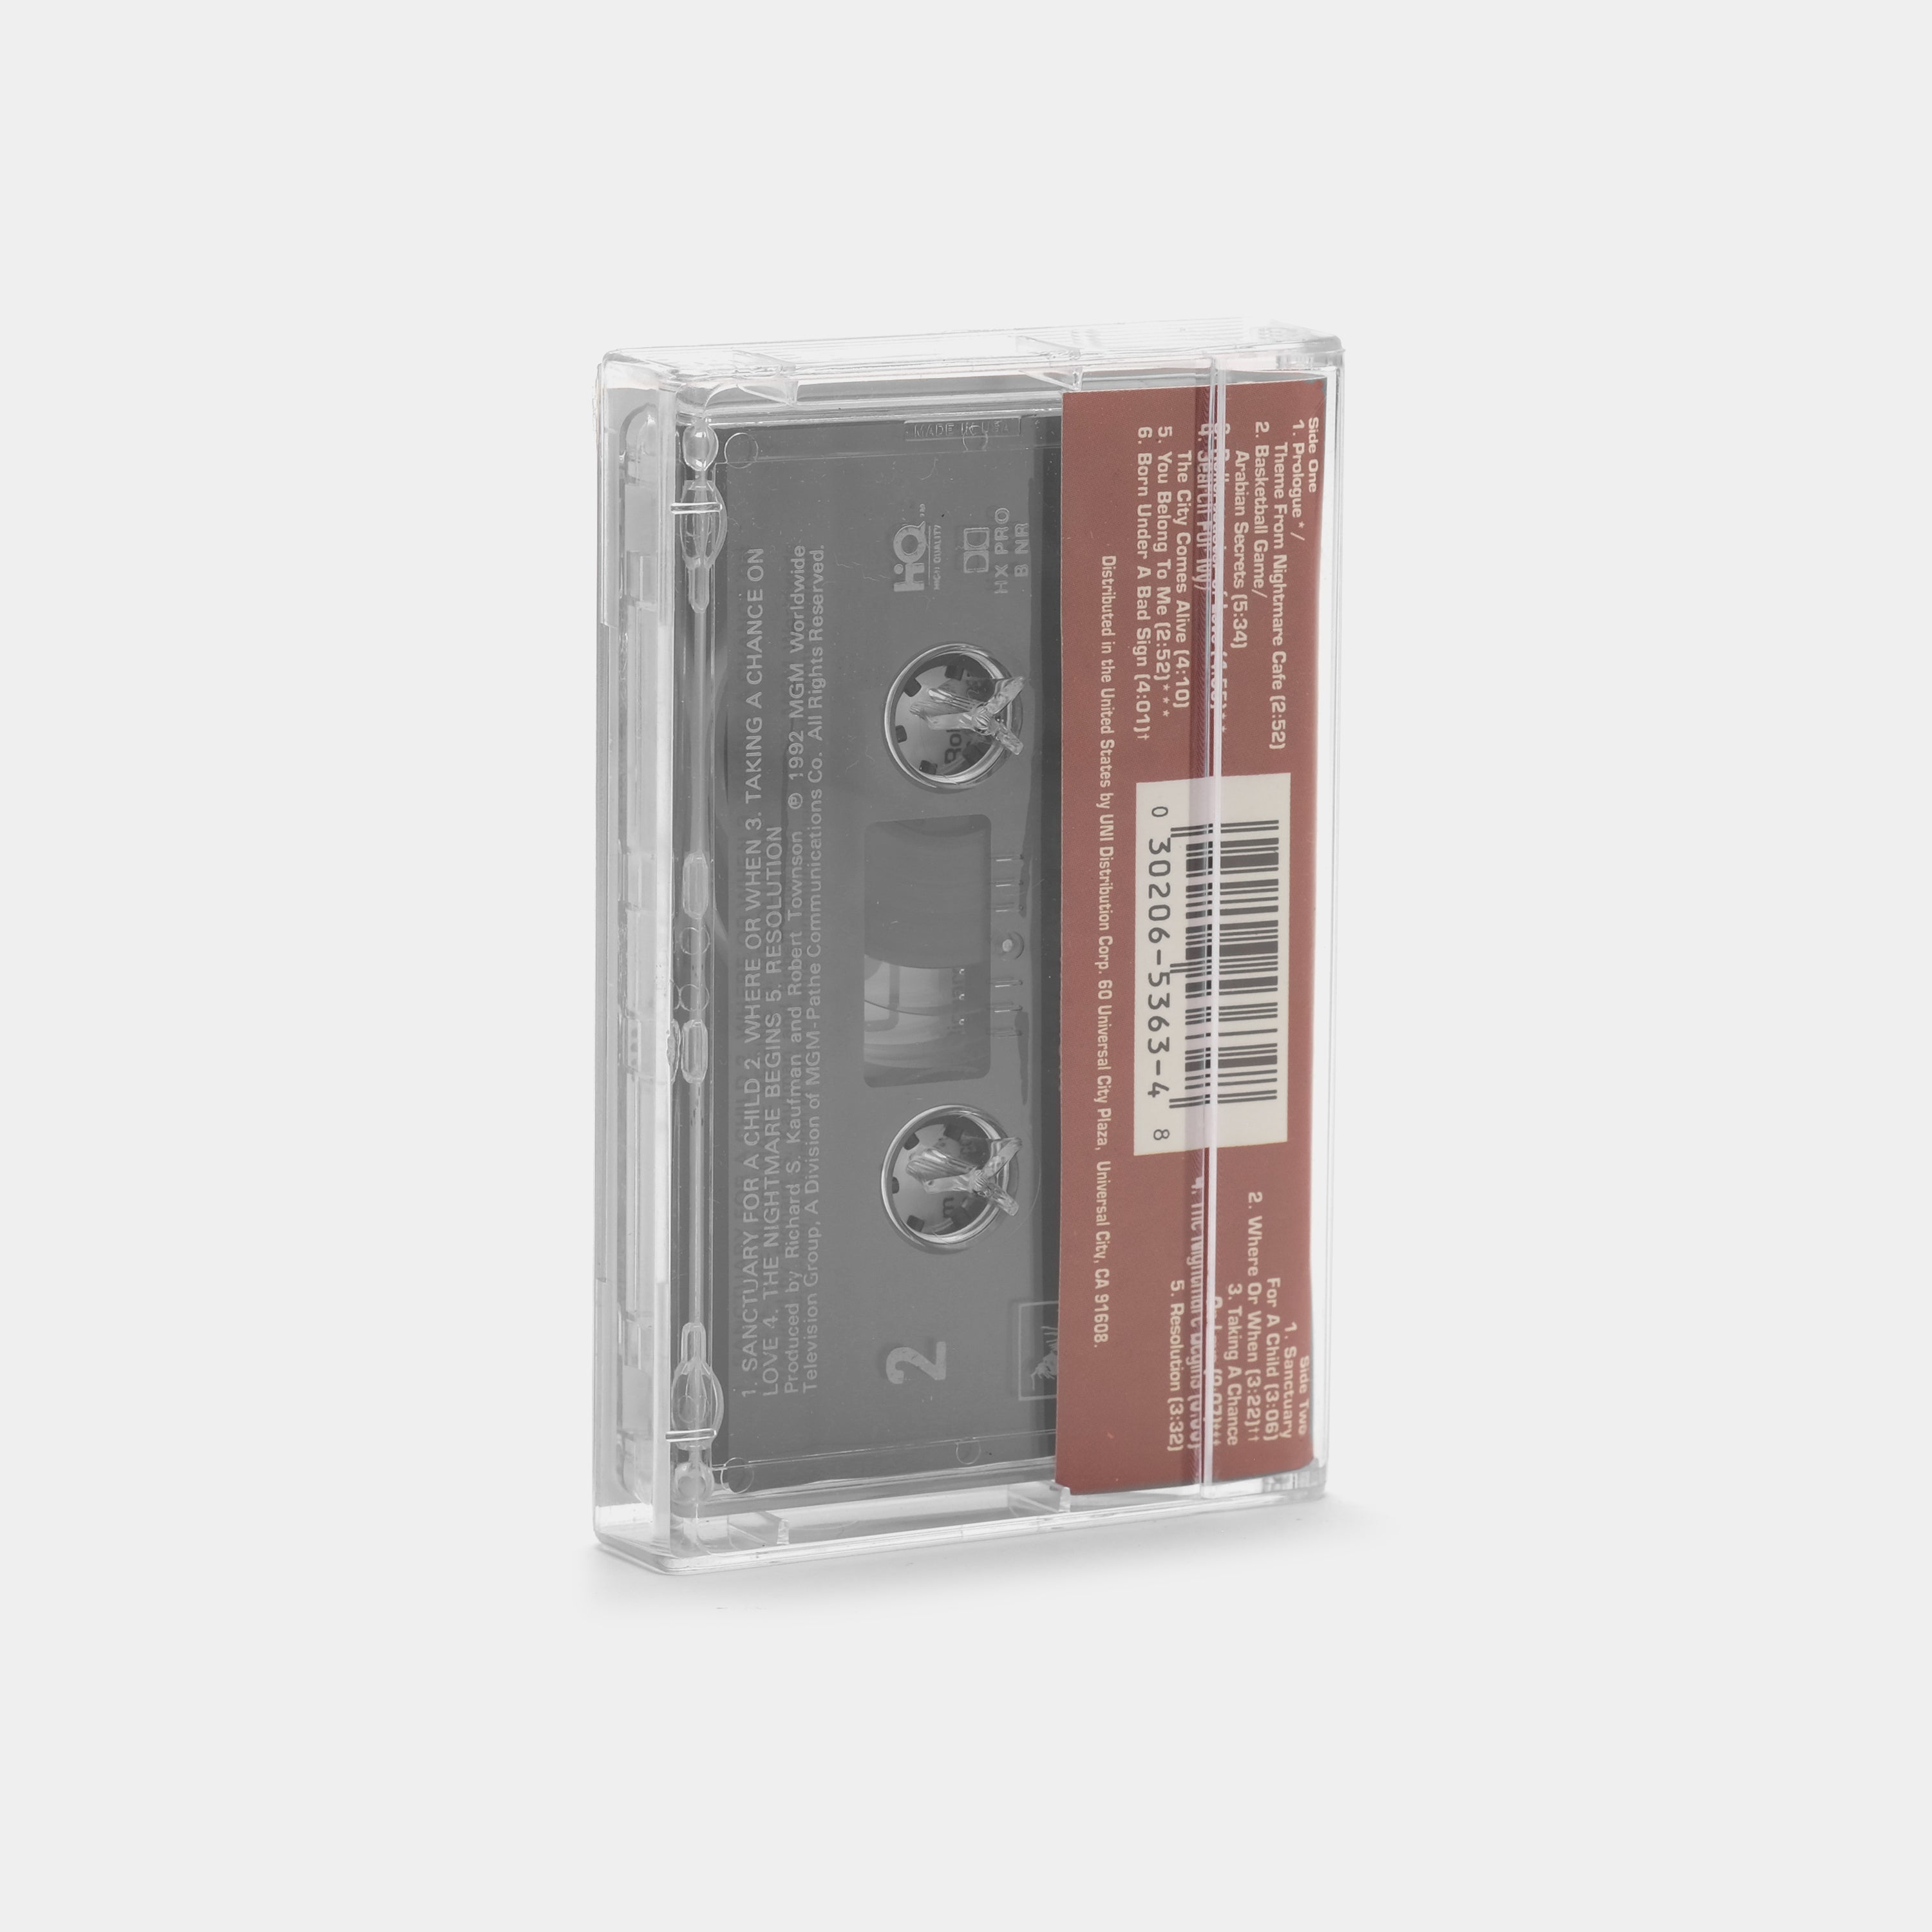 J. Peter Robinson - Nightmare Cafe (Original Television Soundtrack) Cassette Tape